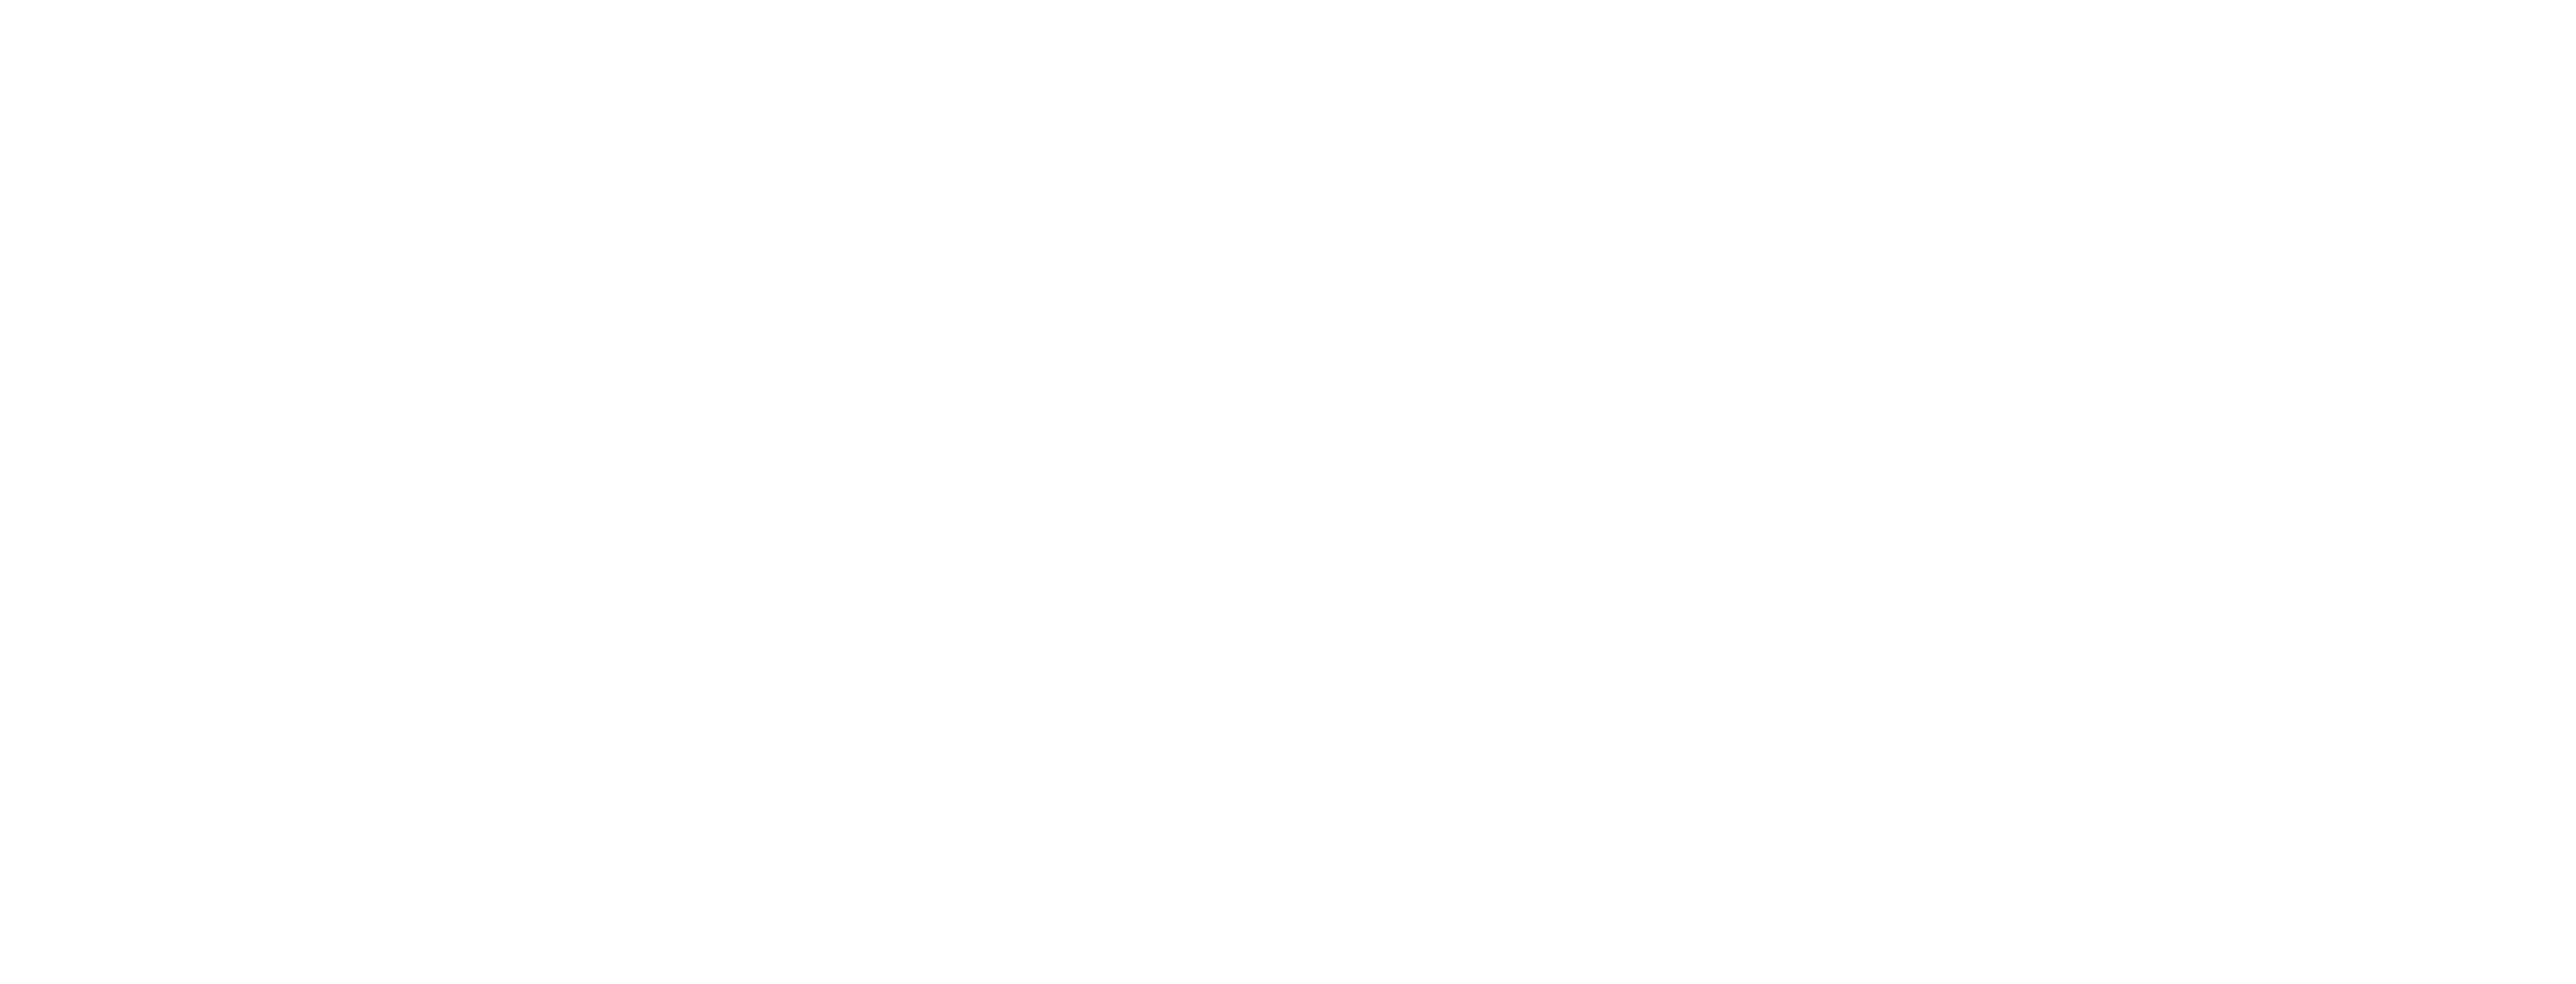 fadep_solo-03